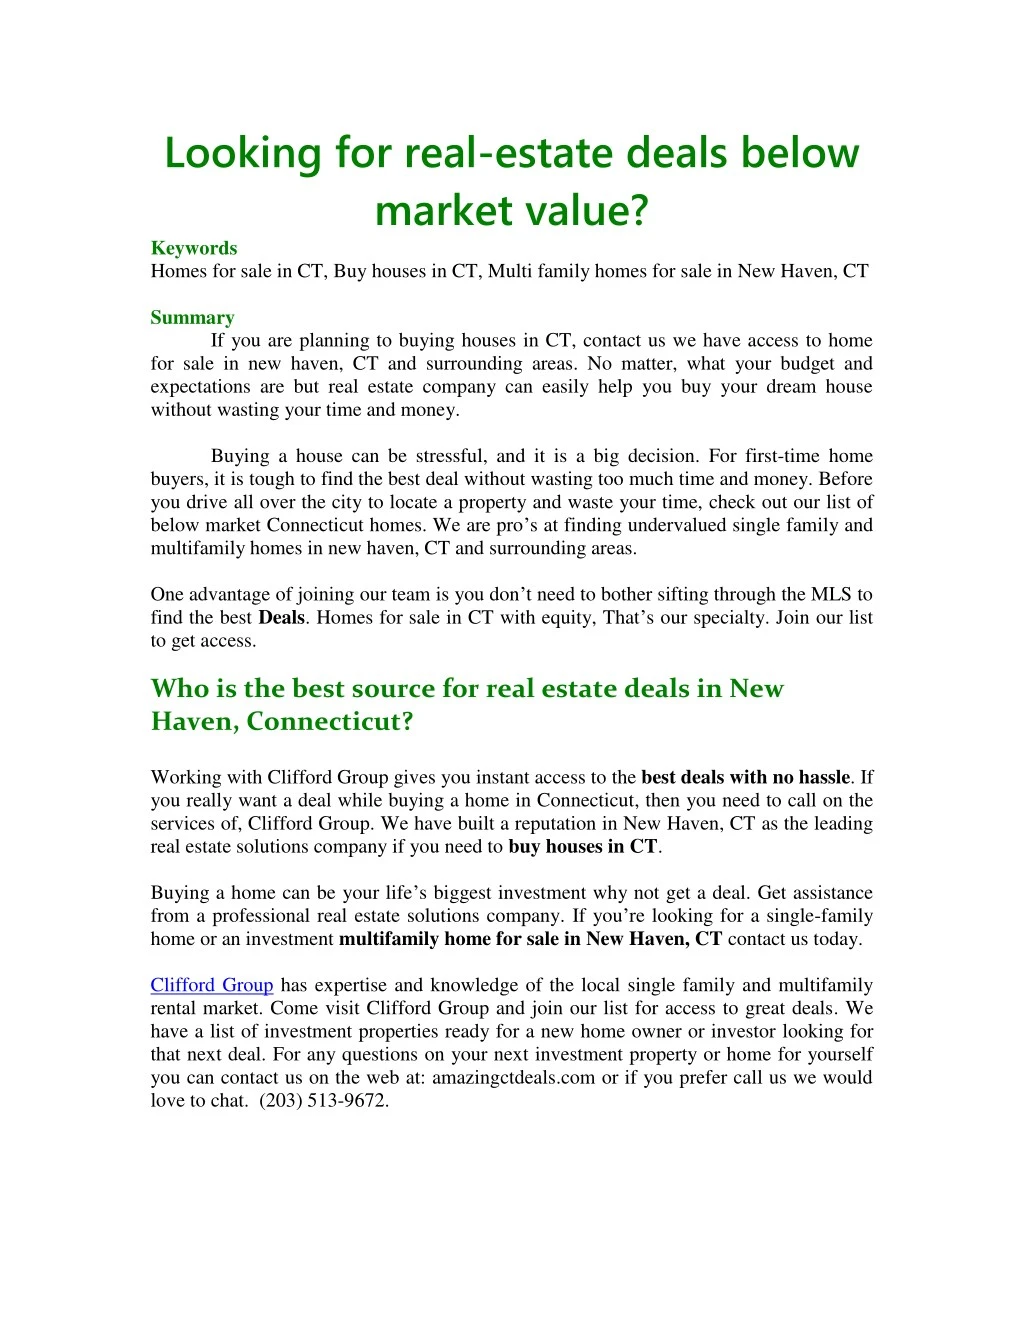 looking for real estate deals below market value